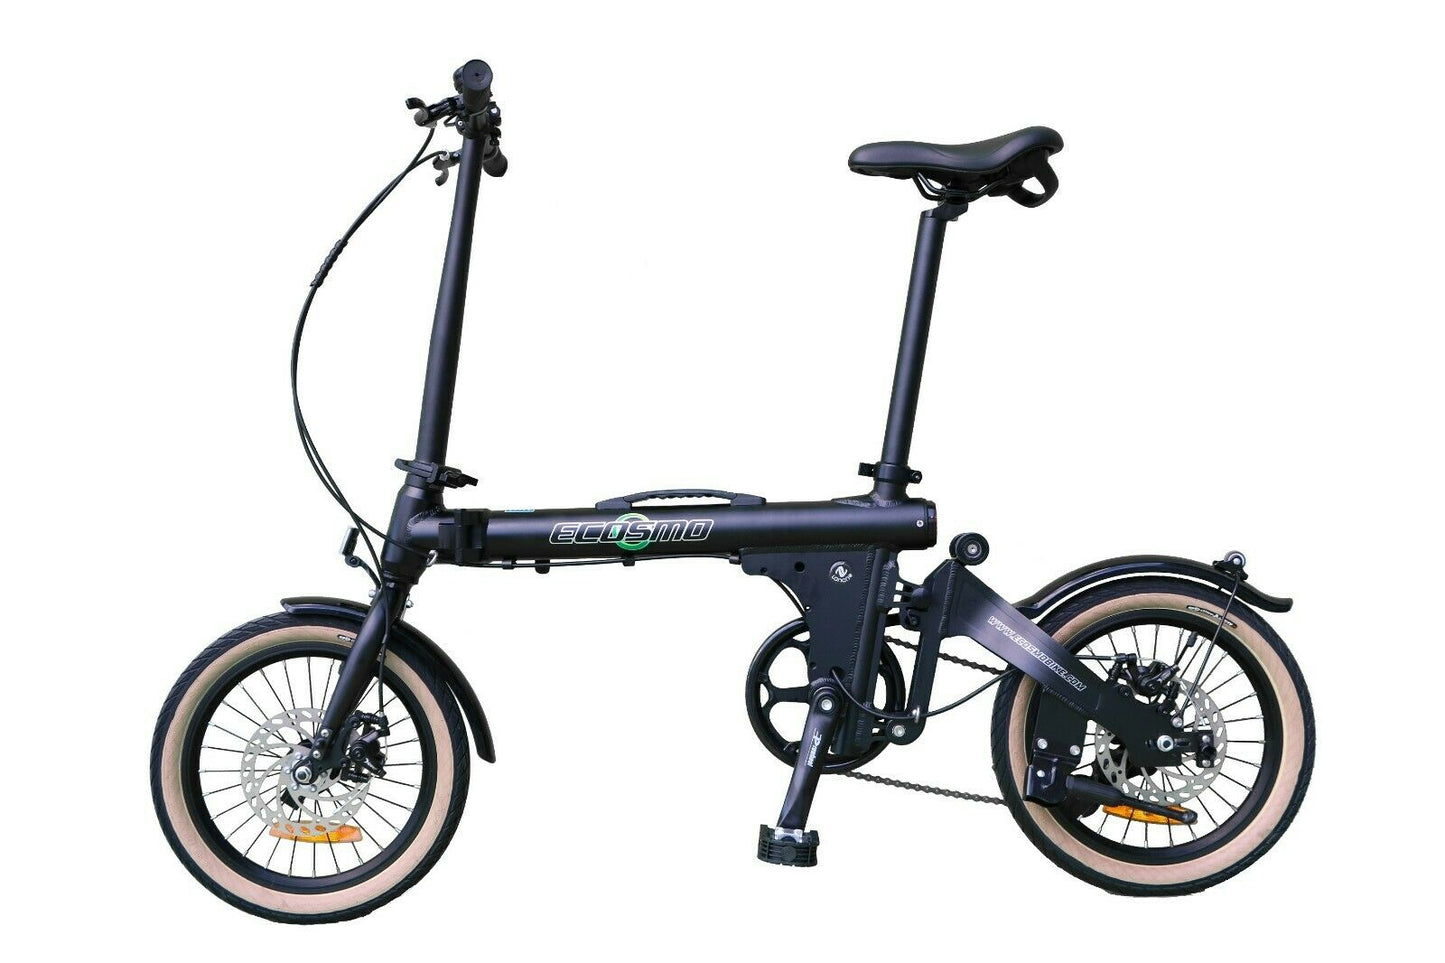 16″ Wheel Lightweight Alloy Folding Bicycle Dual Disc – Black